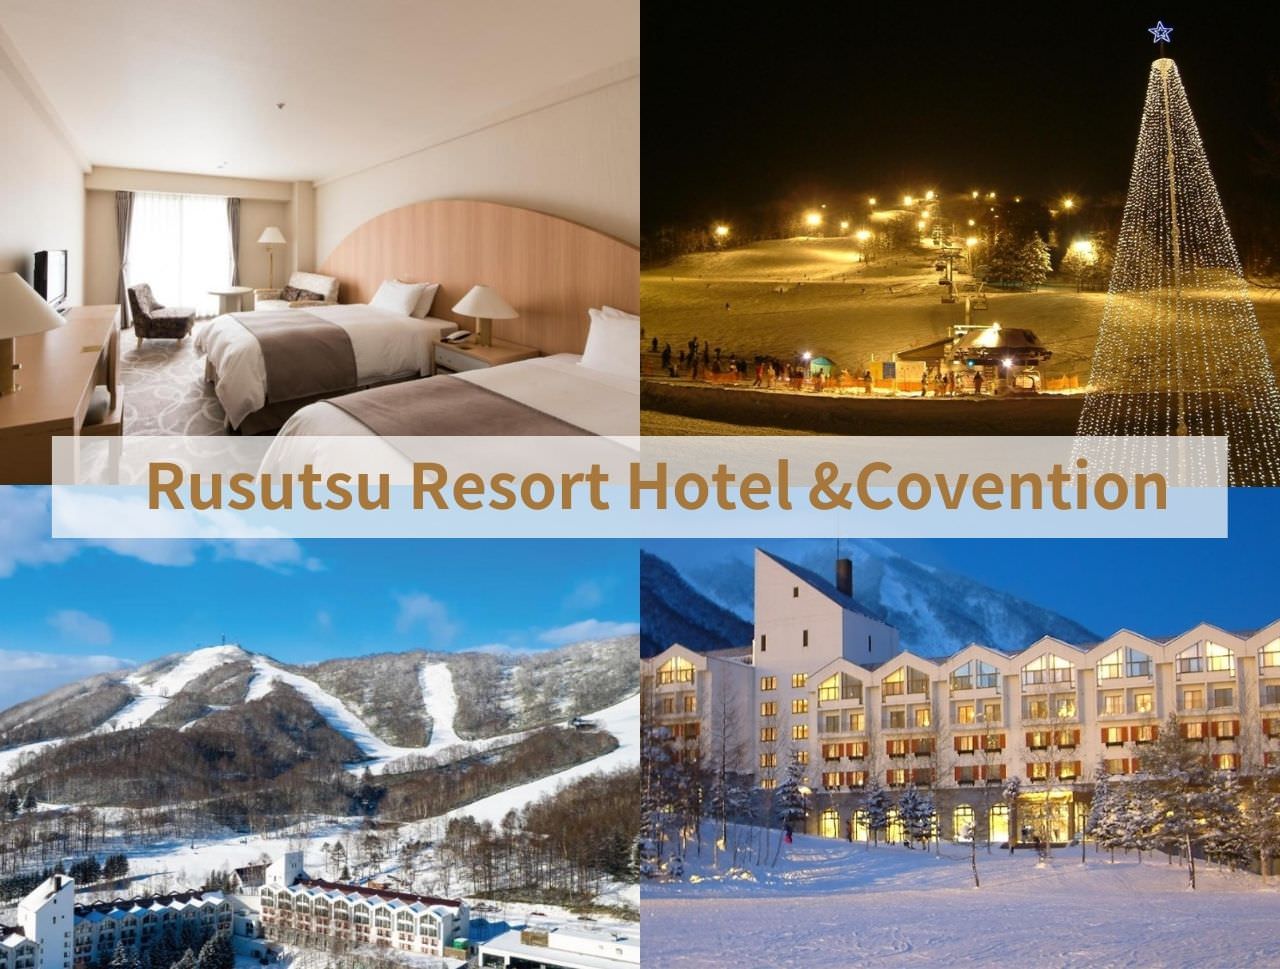 Rusutsu Resort Hotel Covention